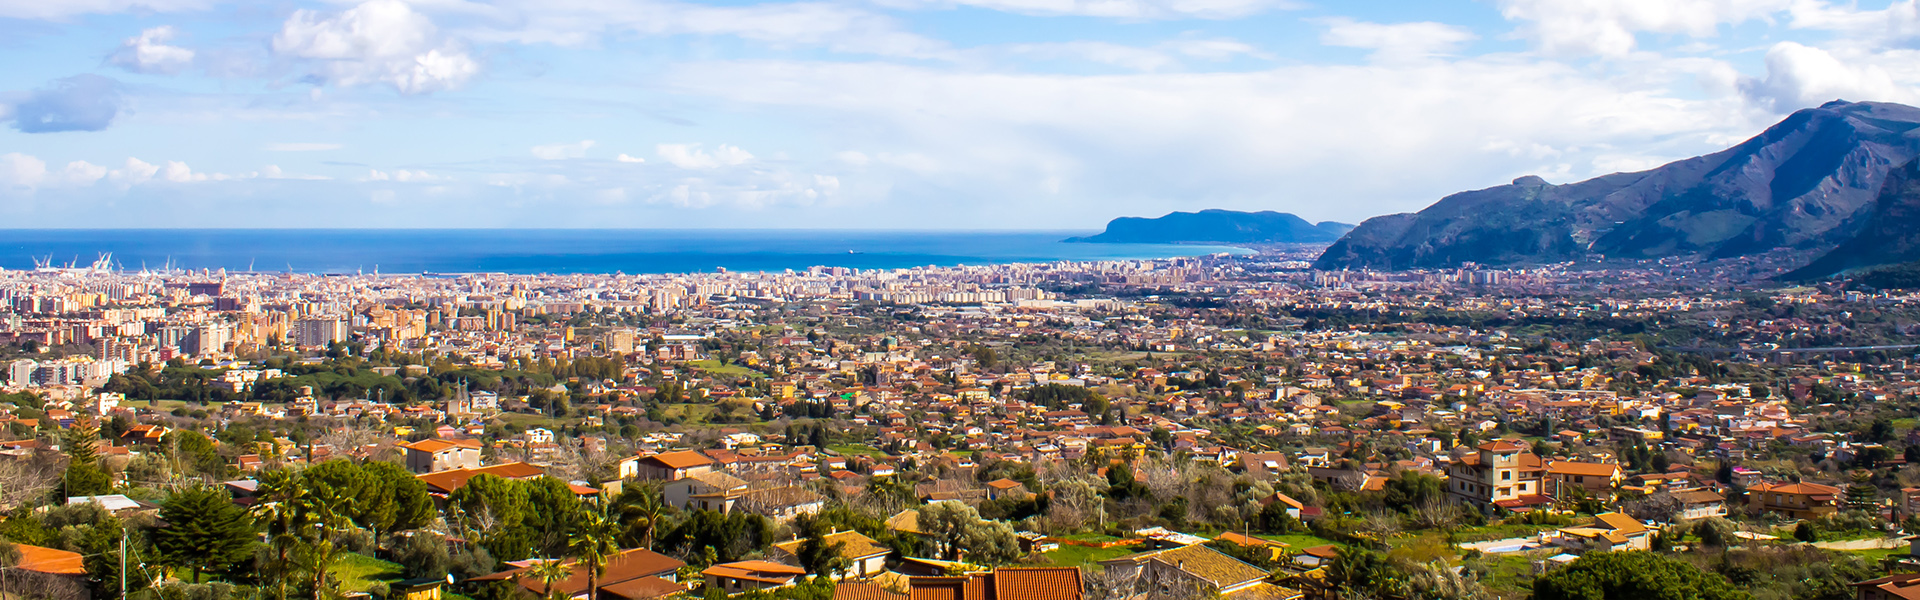 Una panoramica di Palermo